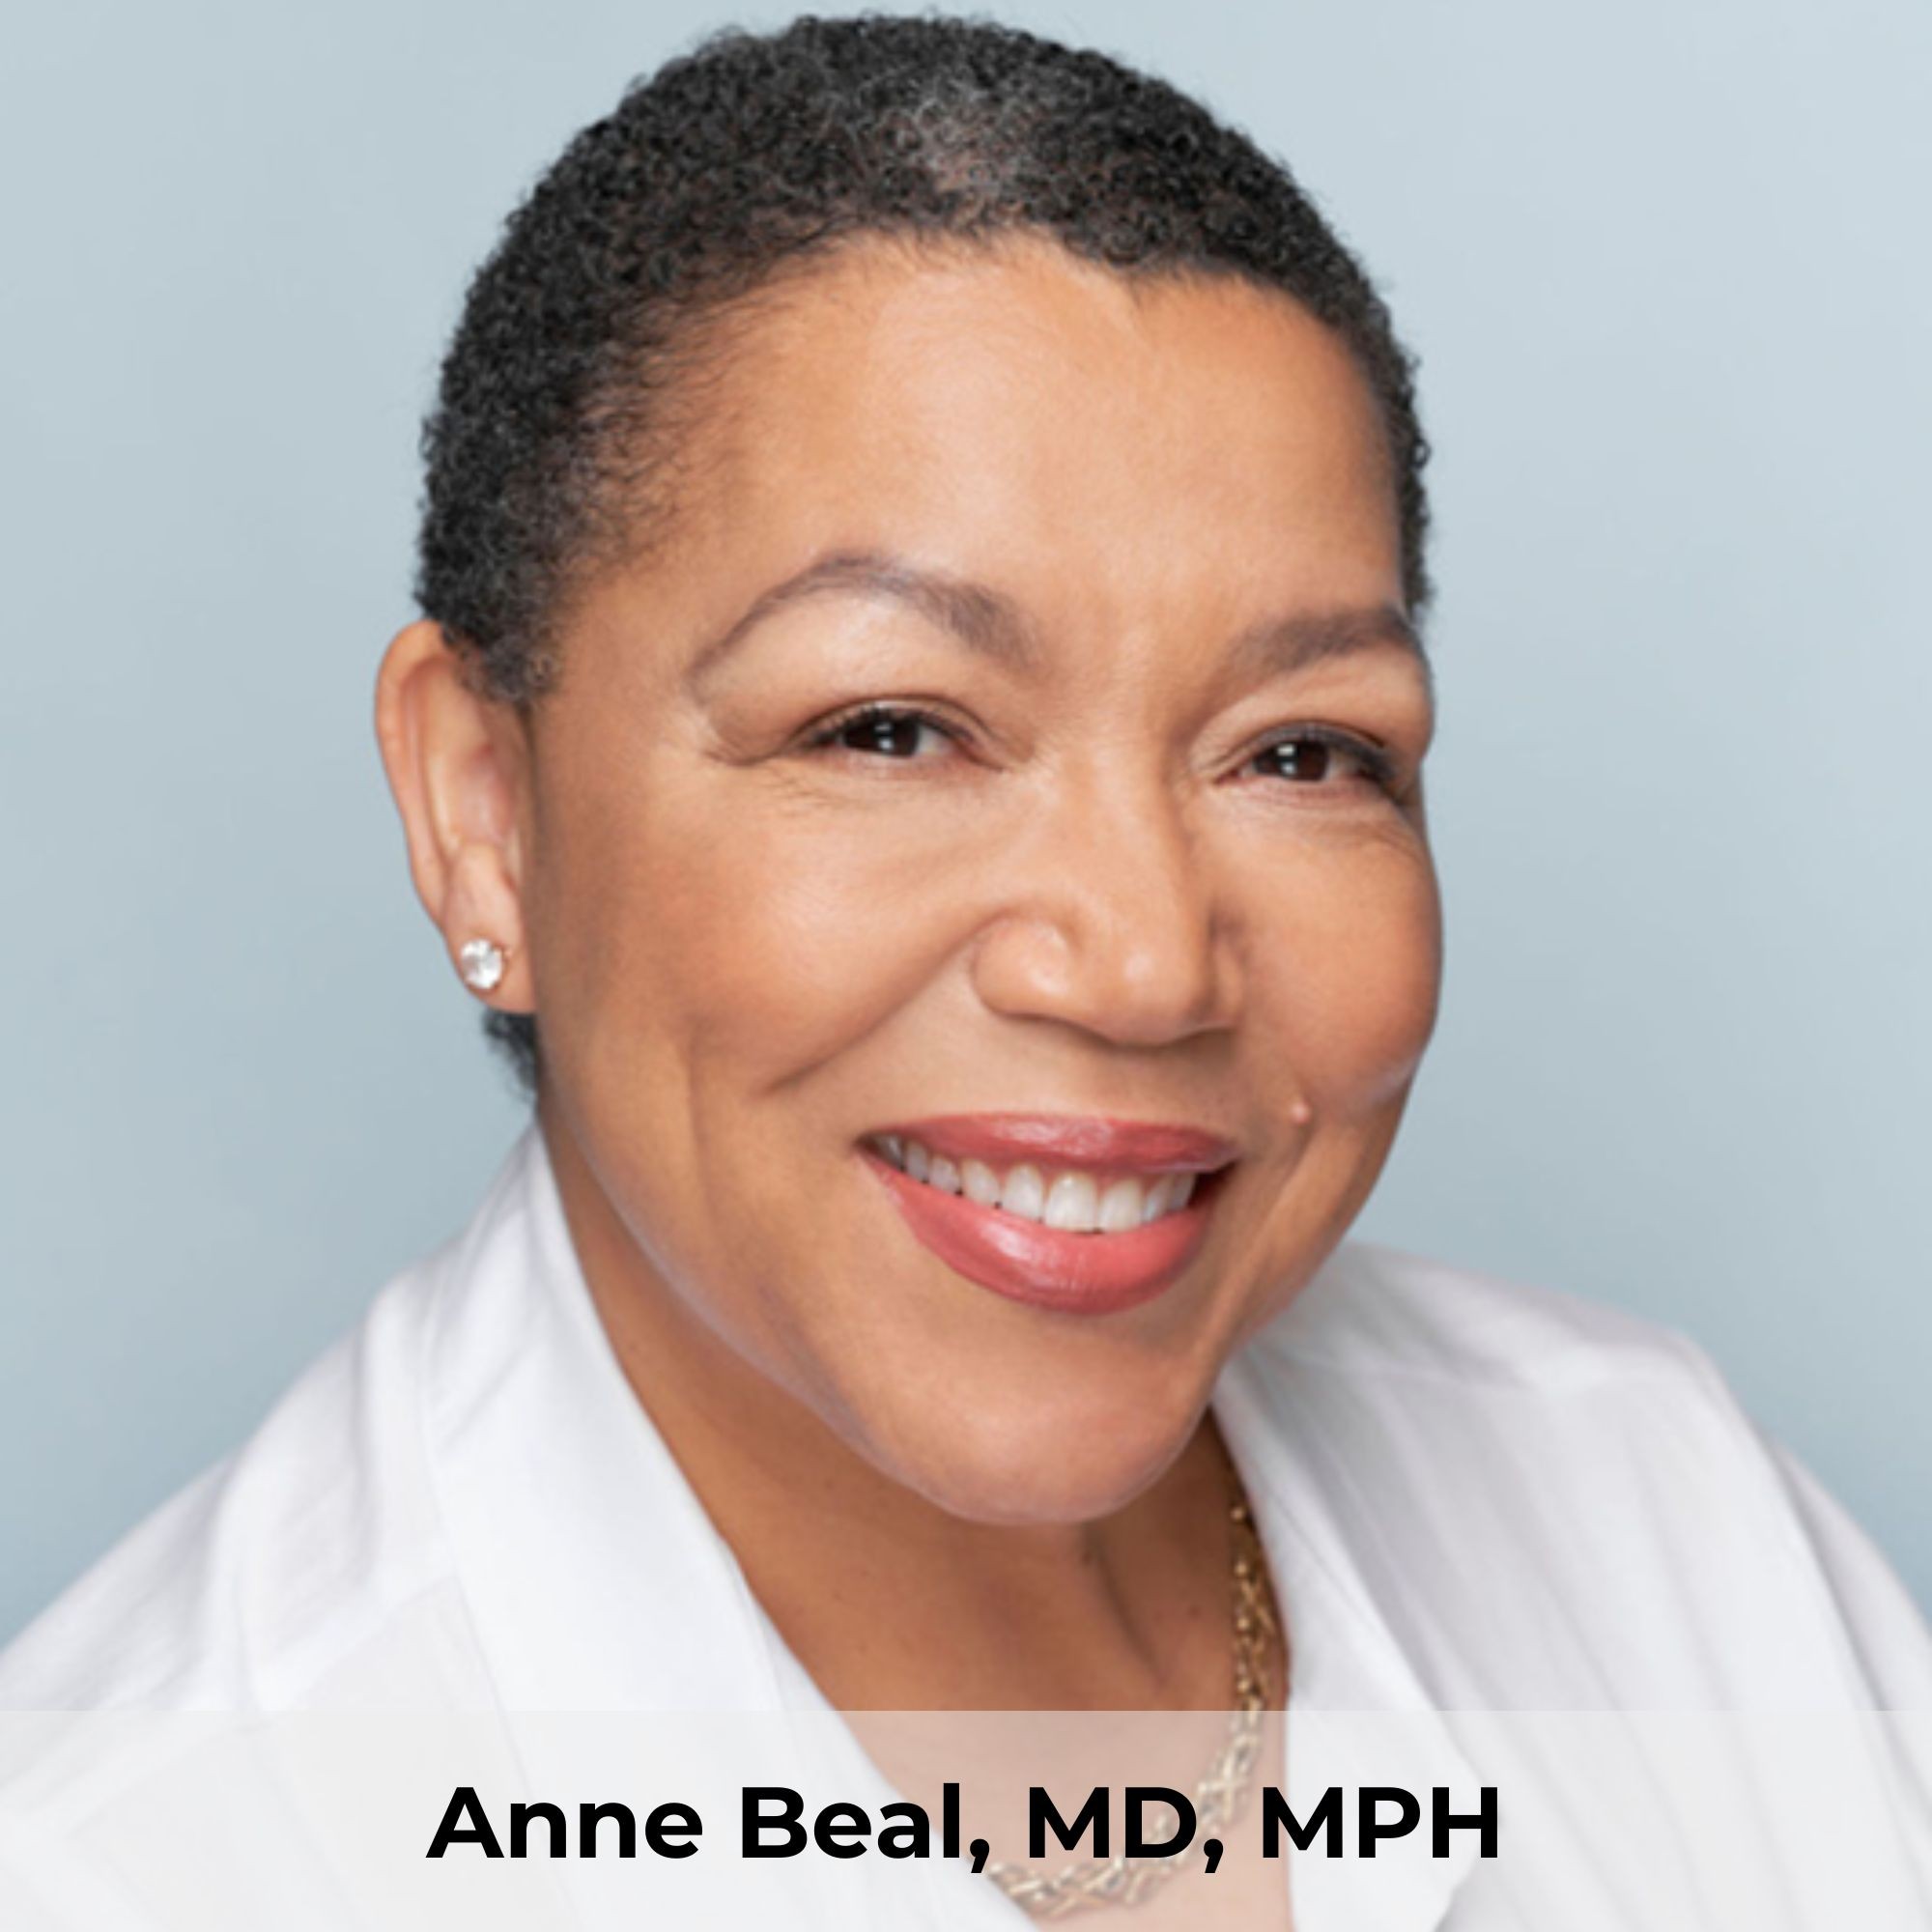 Dr. Anne Beal